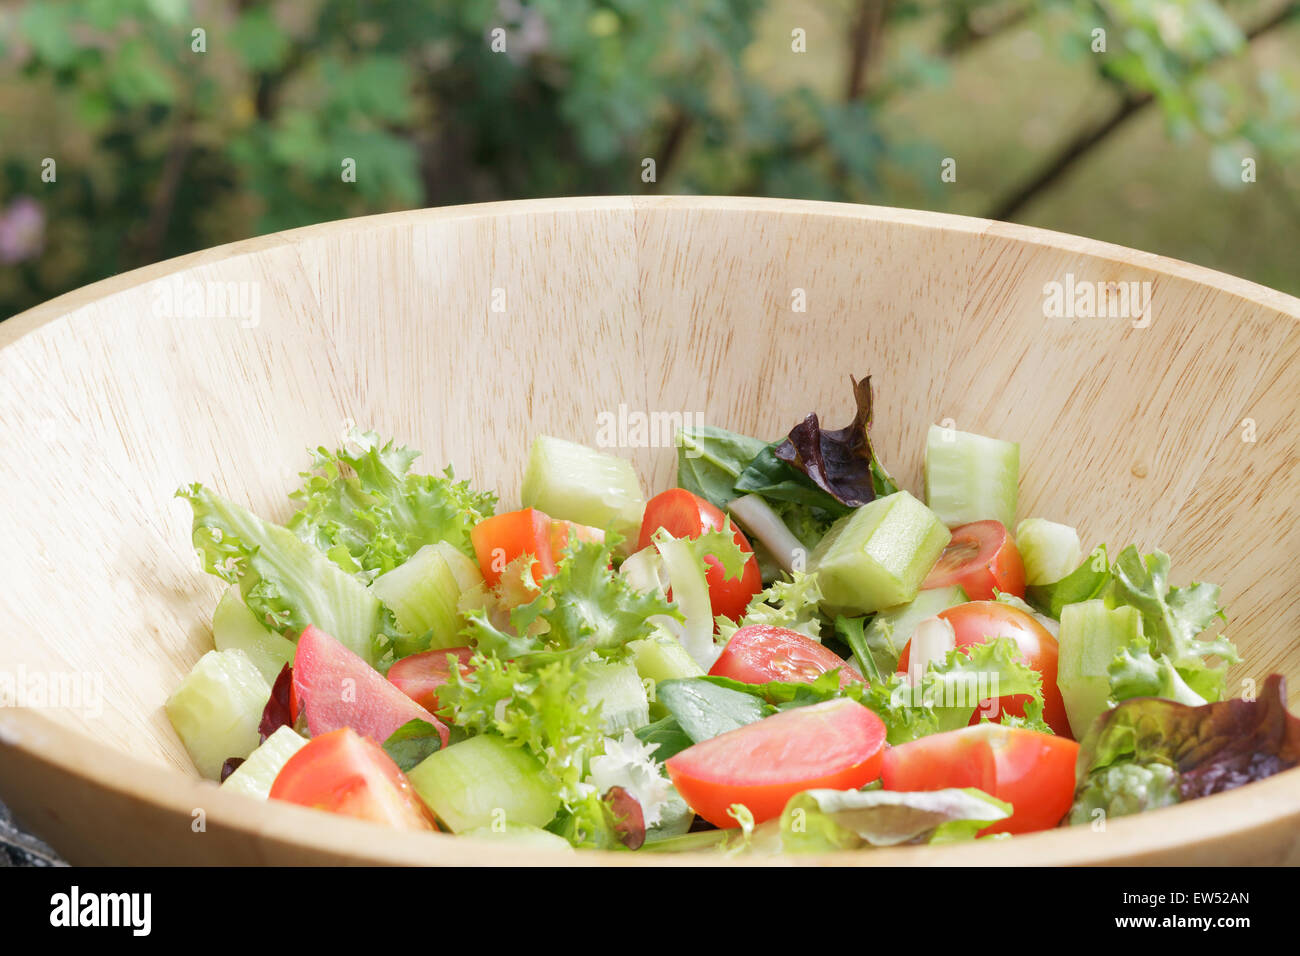 Bowl of salad outside Stock Photo